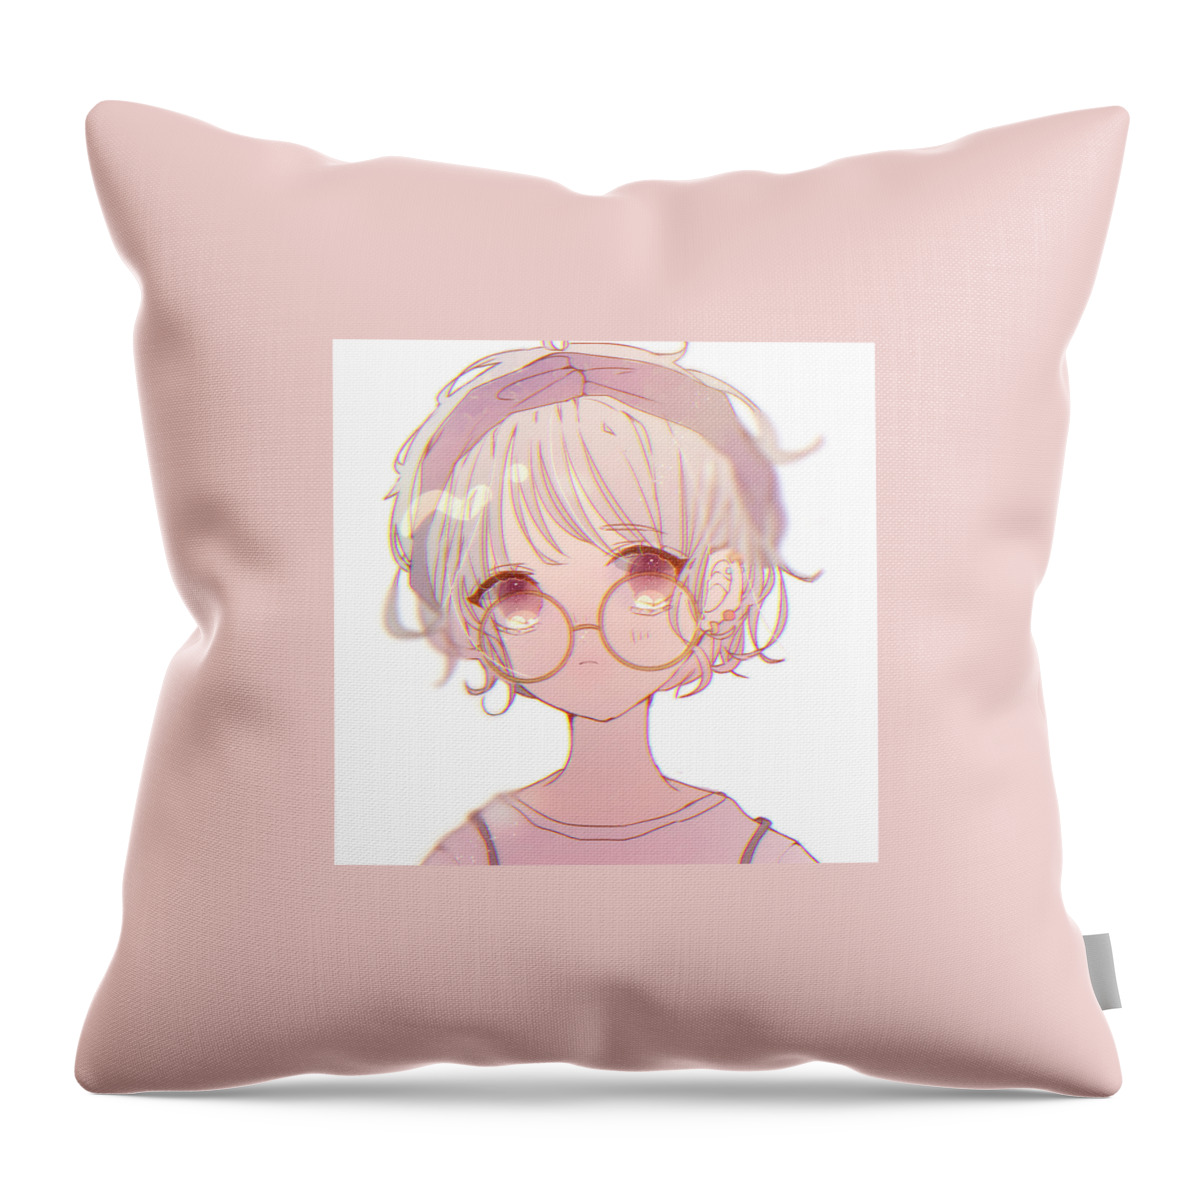 Japan Throw Pillow featuring the photograph Spring cute beautiful girl illustration by Kom Furumachi